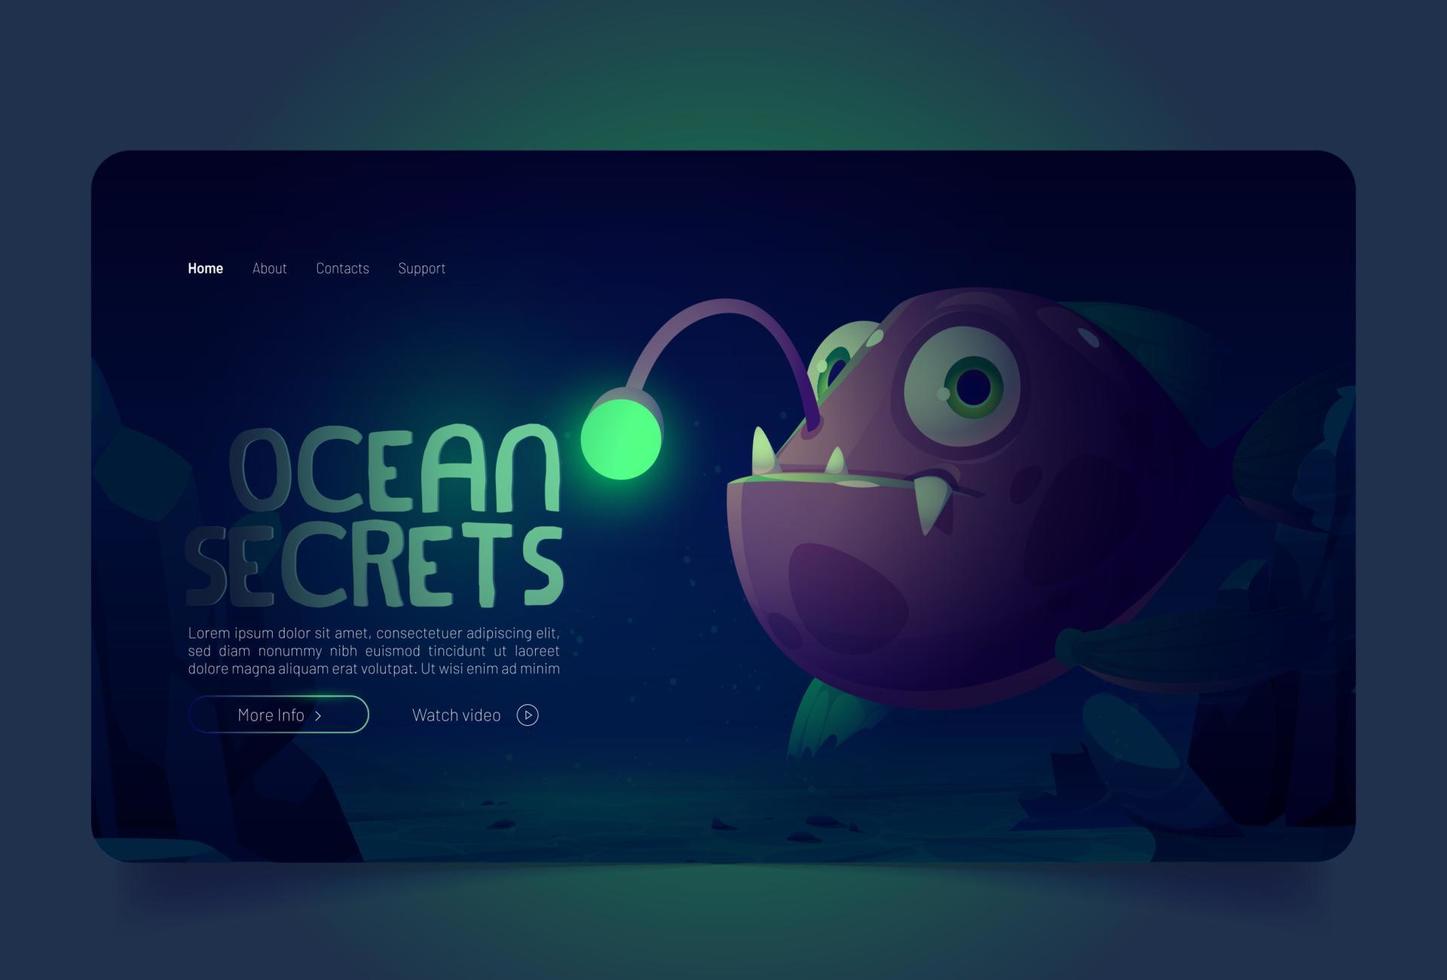 Ocean secrets banner with angler fish on bottom vector